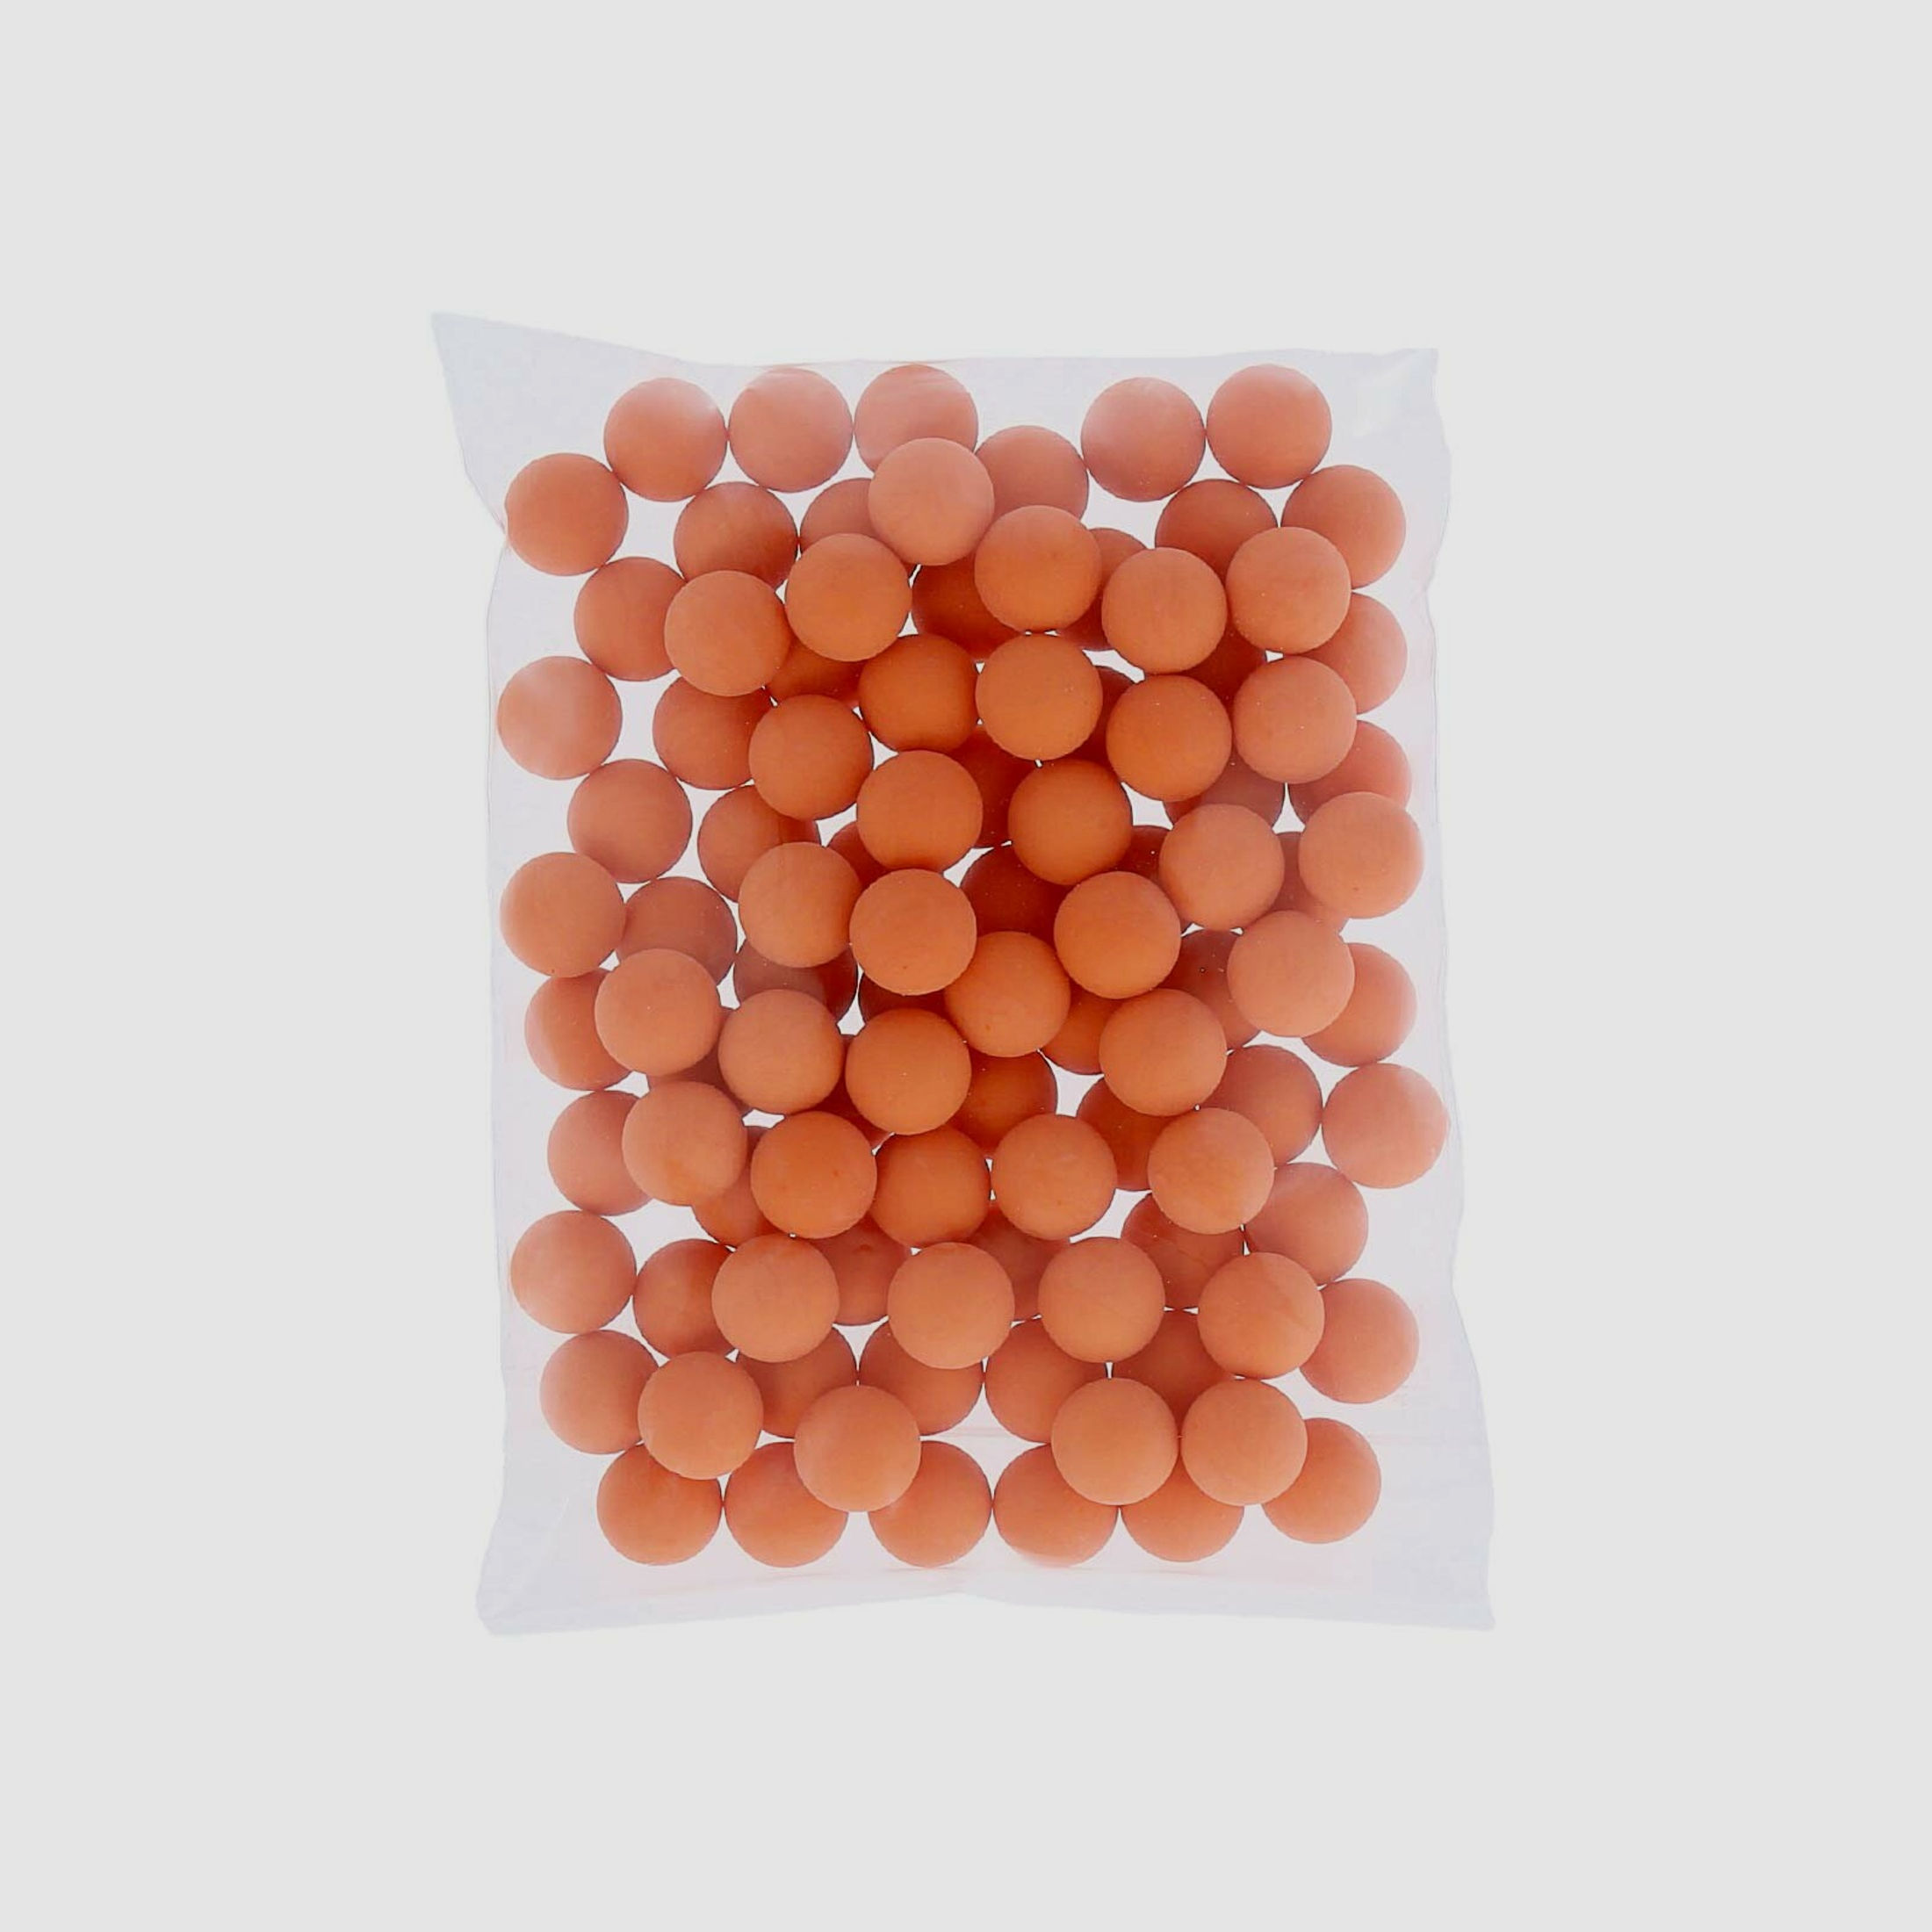 Rubberballs / Gummigeschosse Orange Kal .68 - 100 Stück